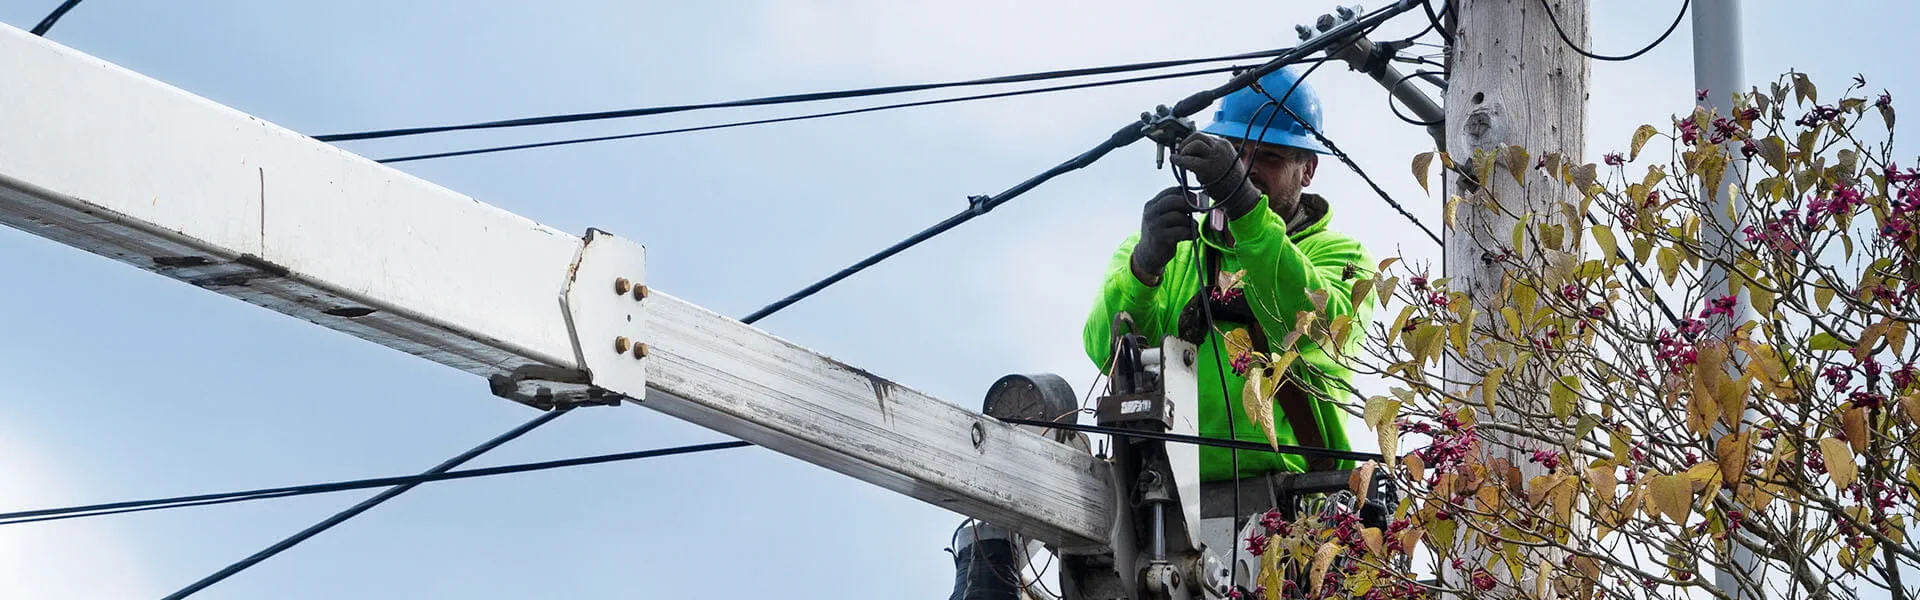 Person in a fiber construction lift installing high-quality, super fast fiber internet